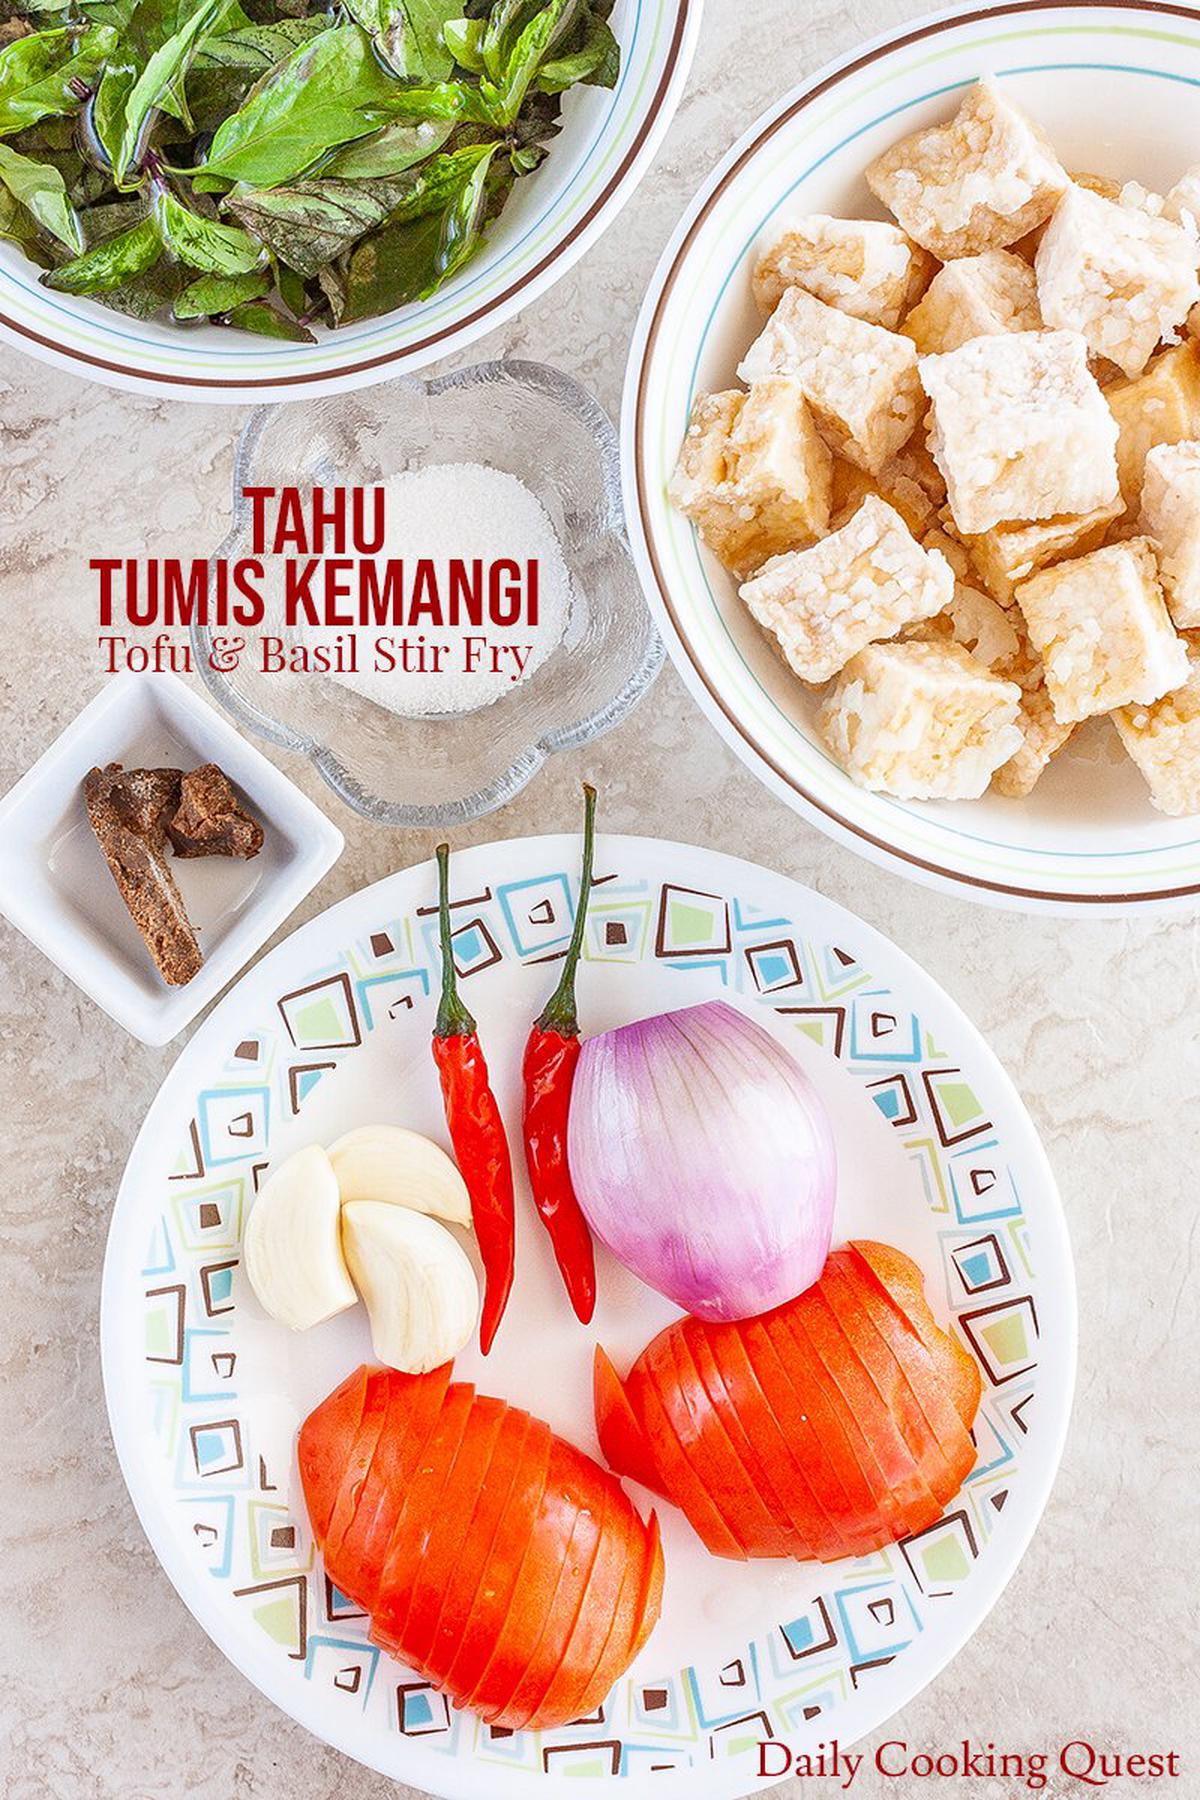 Tahu Tumis Kemangi - Tofu & Basil Stir Fry